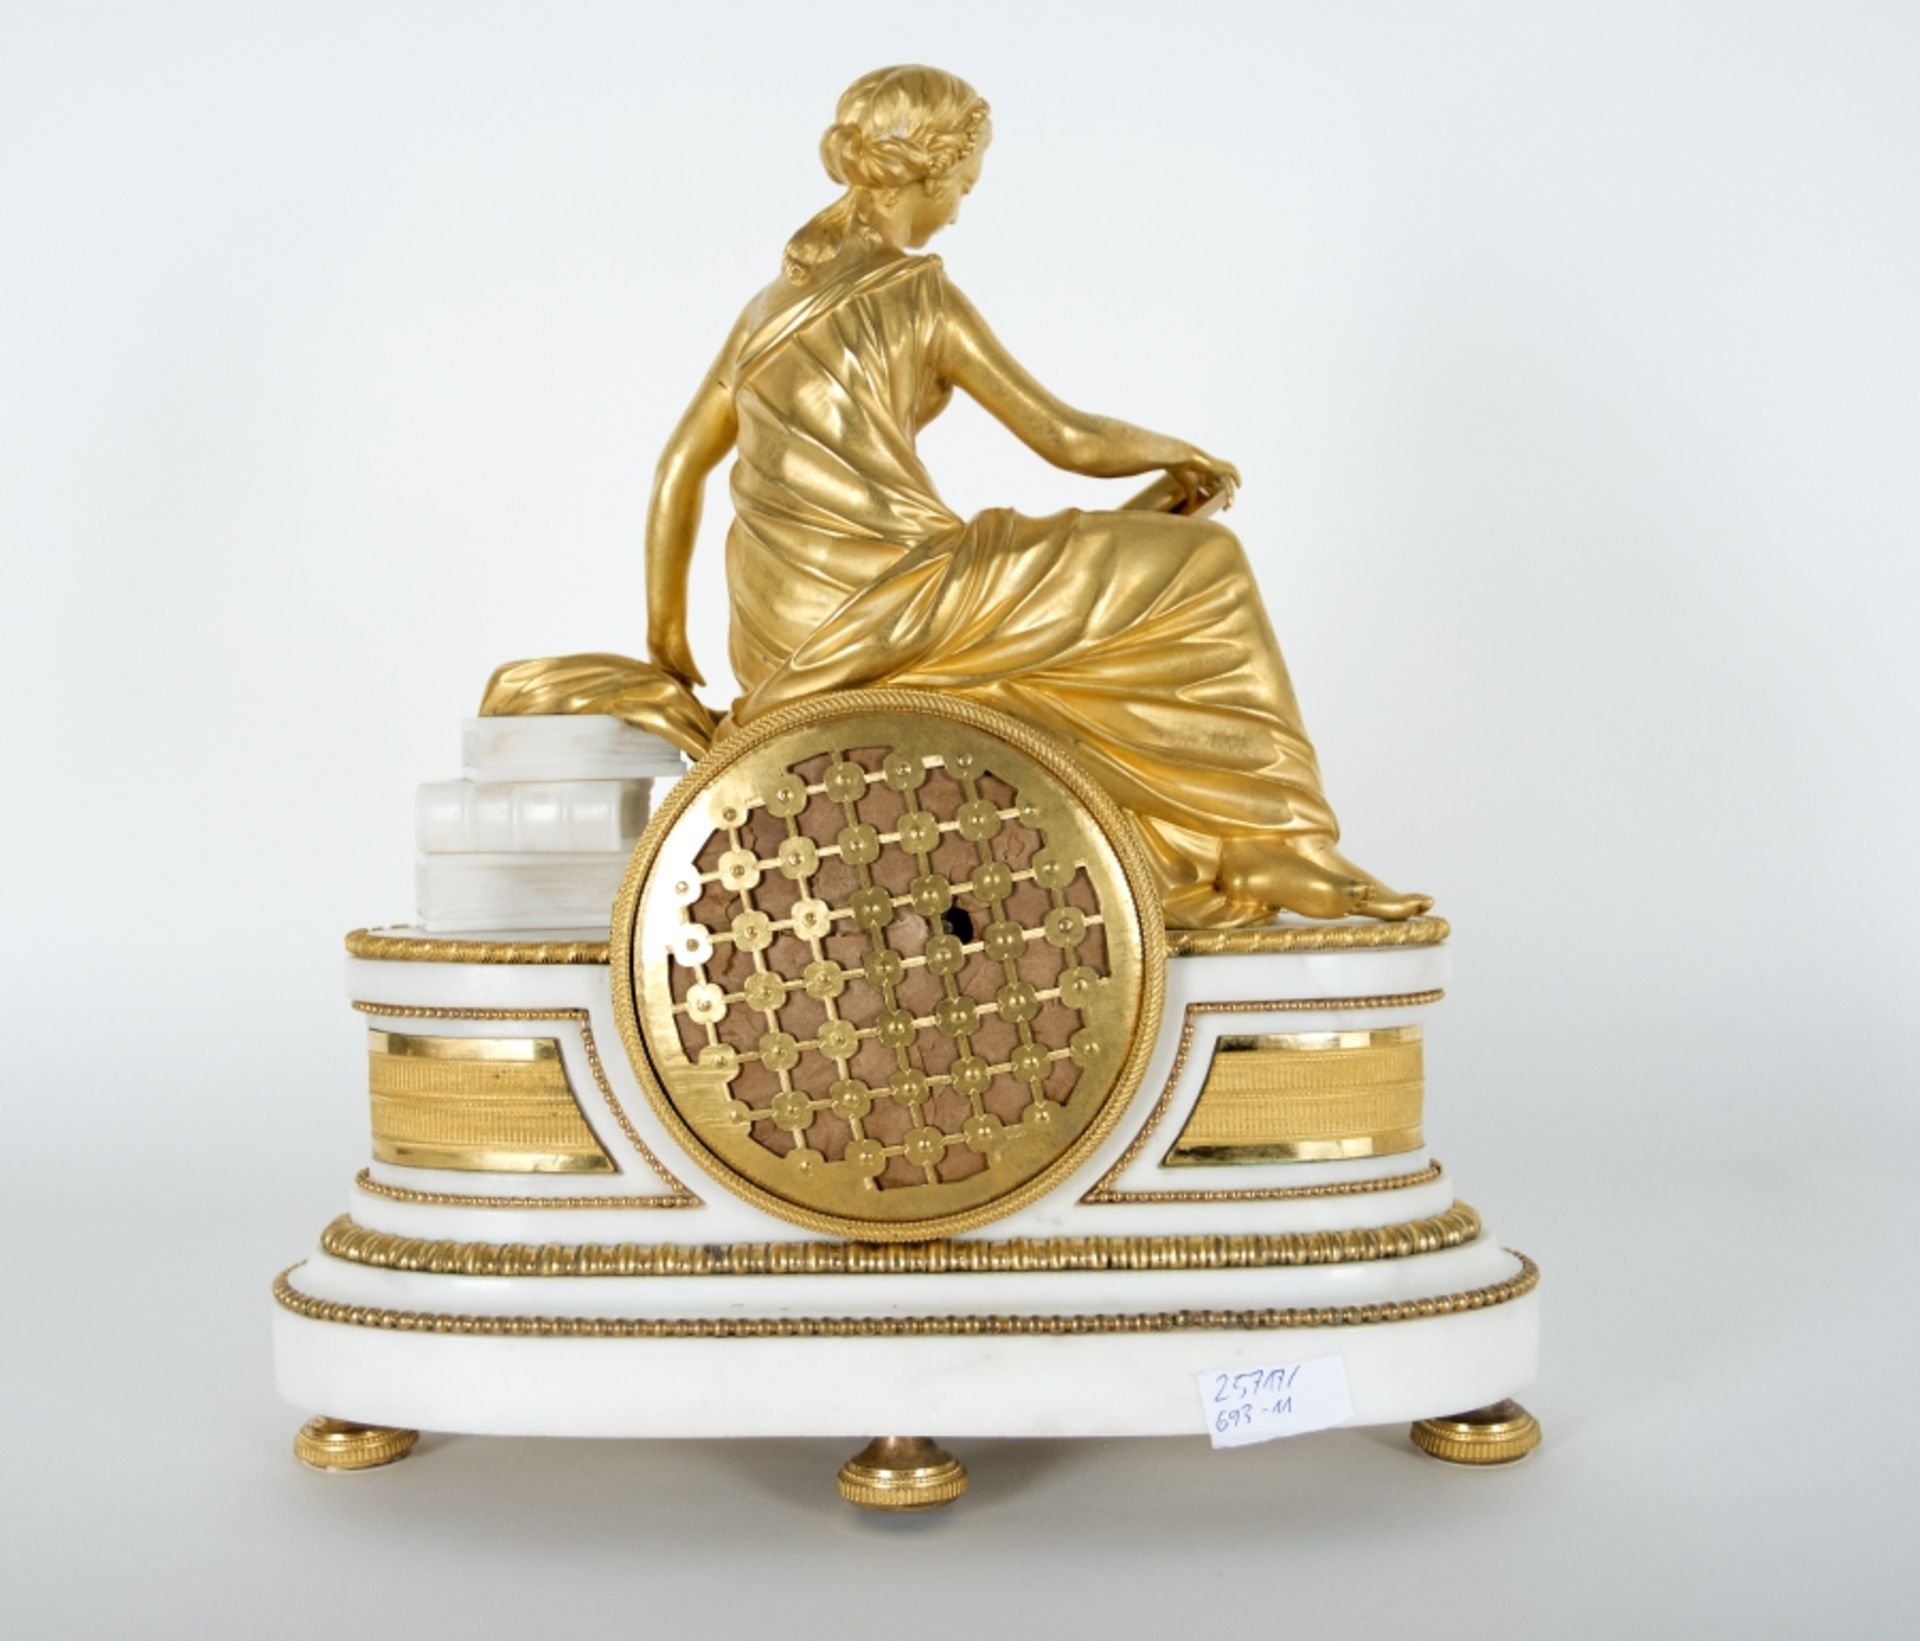 Wohl Frankreich um 1800Lettre d'amour (Konsoluhr)Bronze, feuervergoldet, weißer Marmor; H 3 - Image 2 of 2